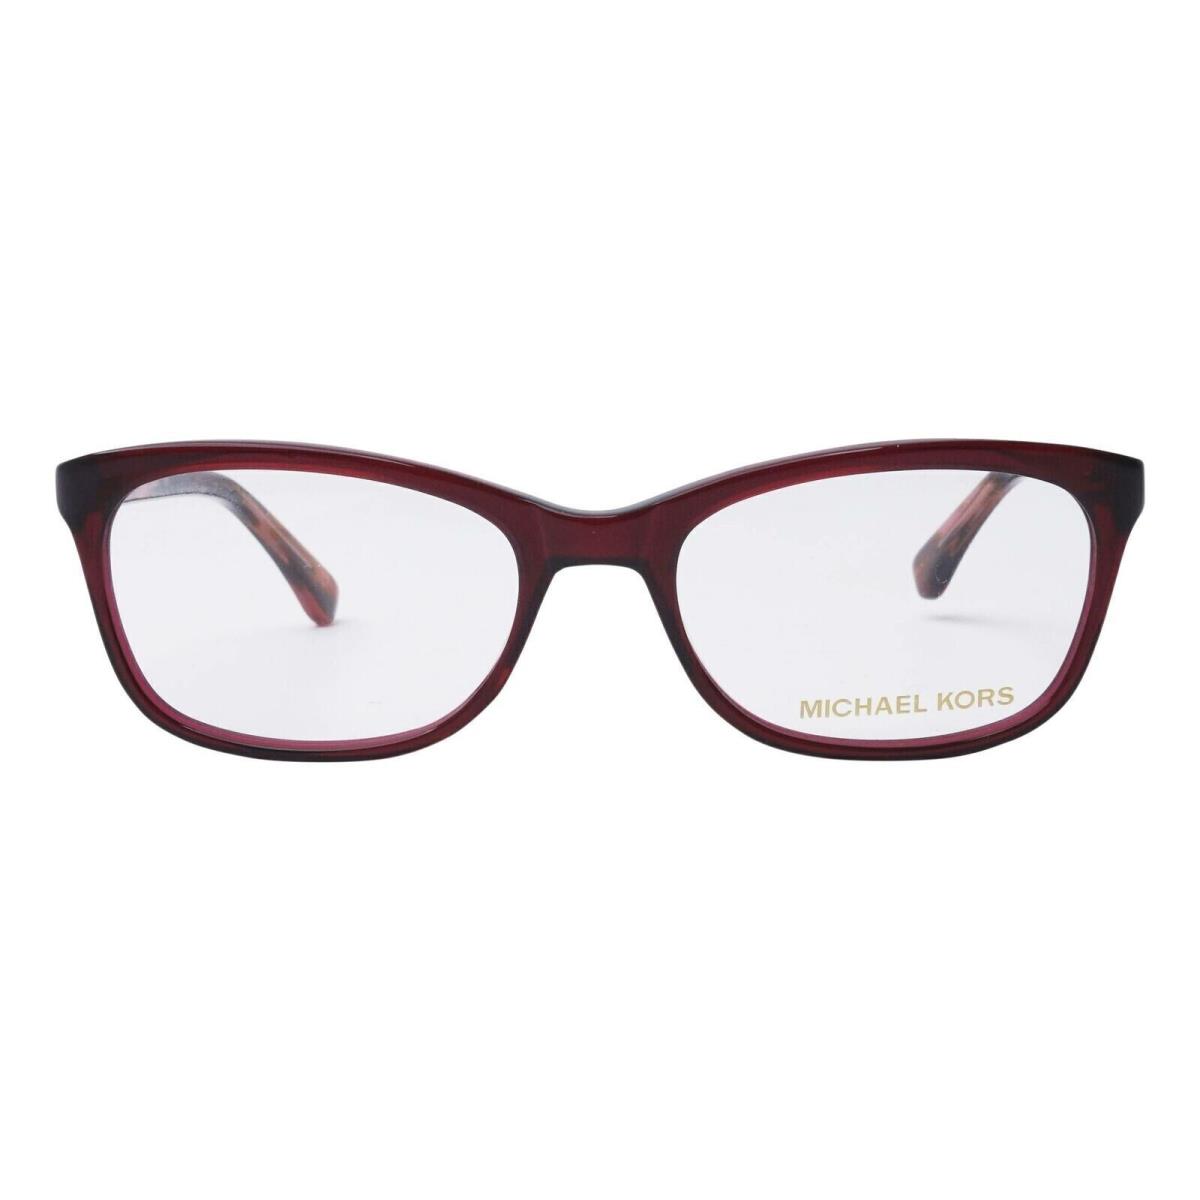 Michael Kors Eyeglasses MK281 618 52 Optical Frame